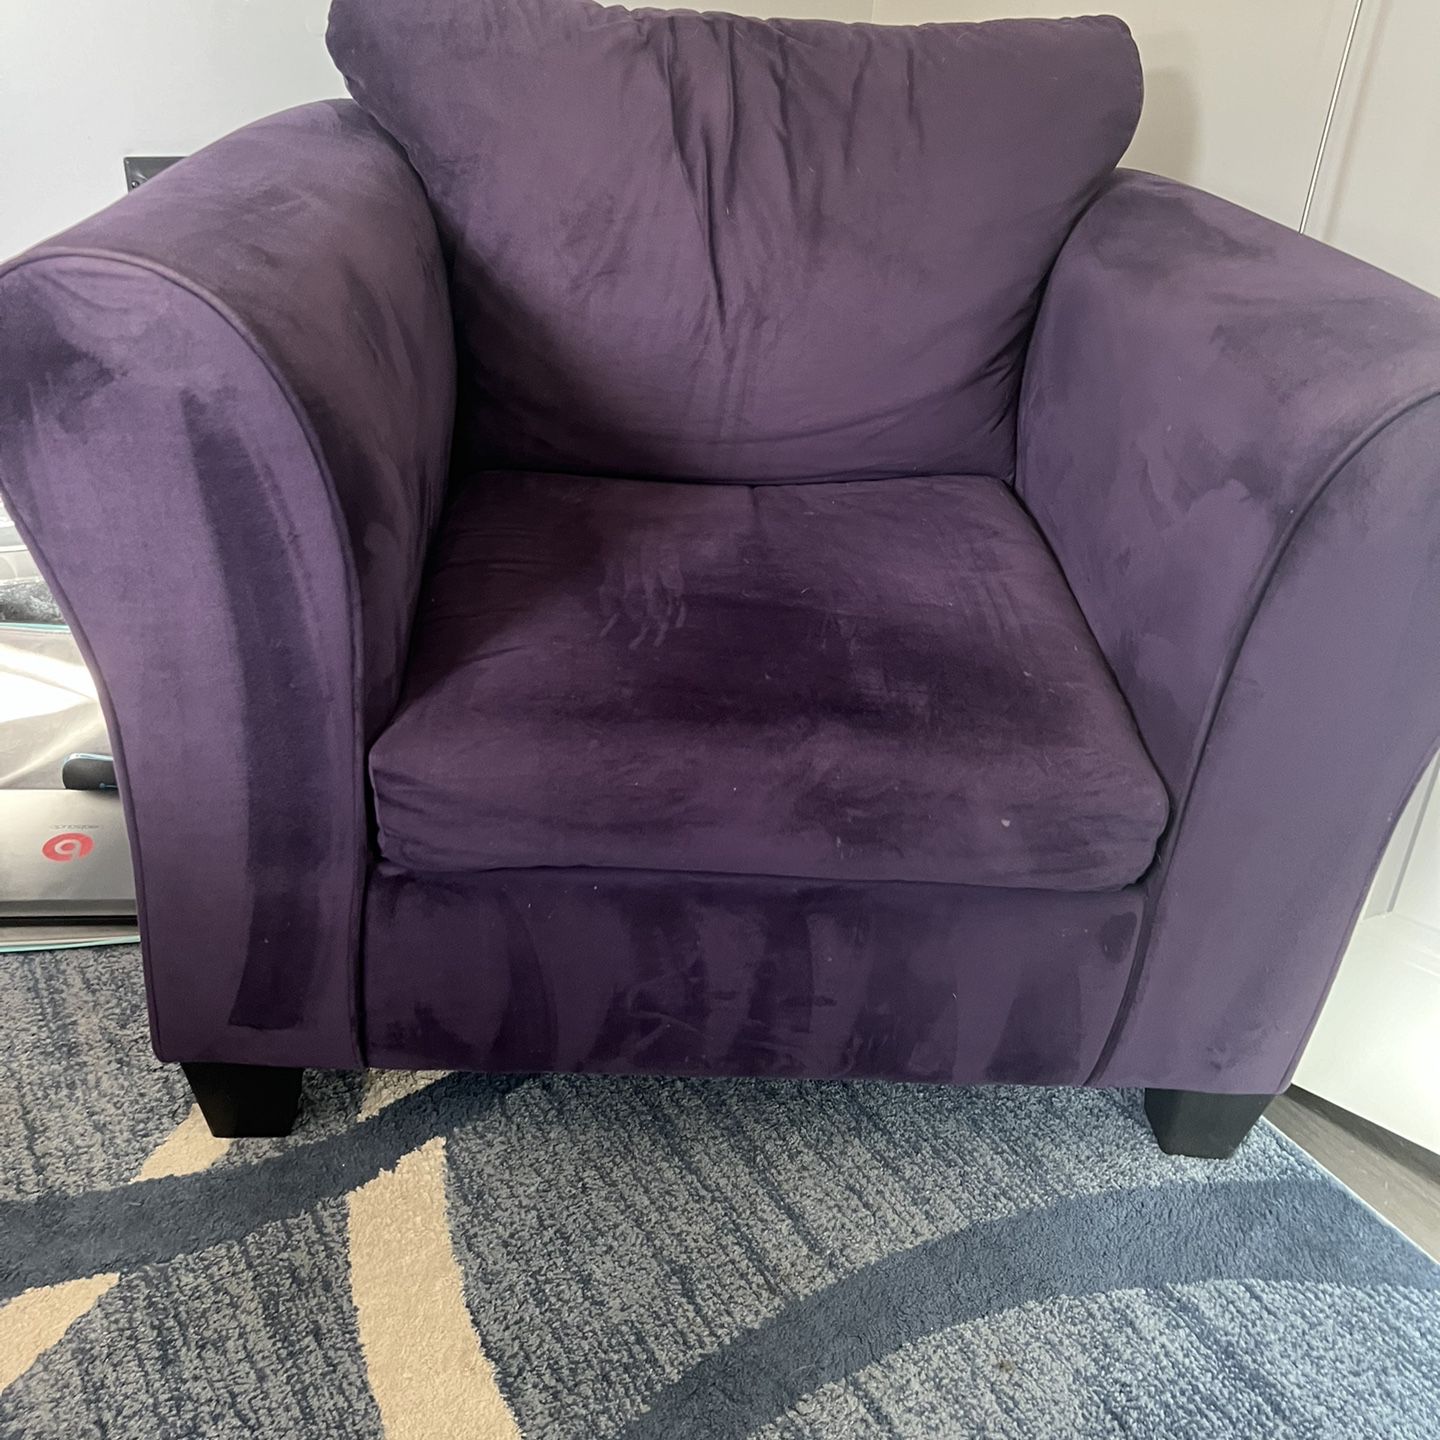 Wayfair - Fredericktown Upholstered Armchair